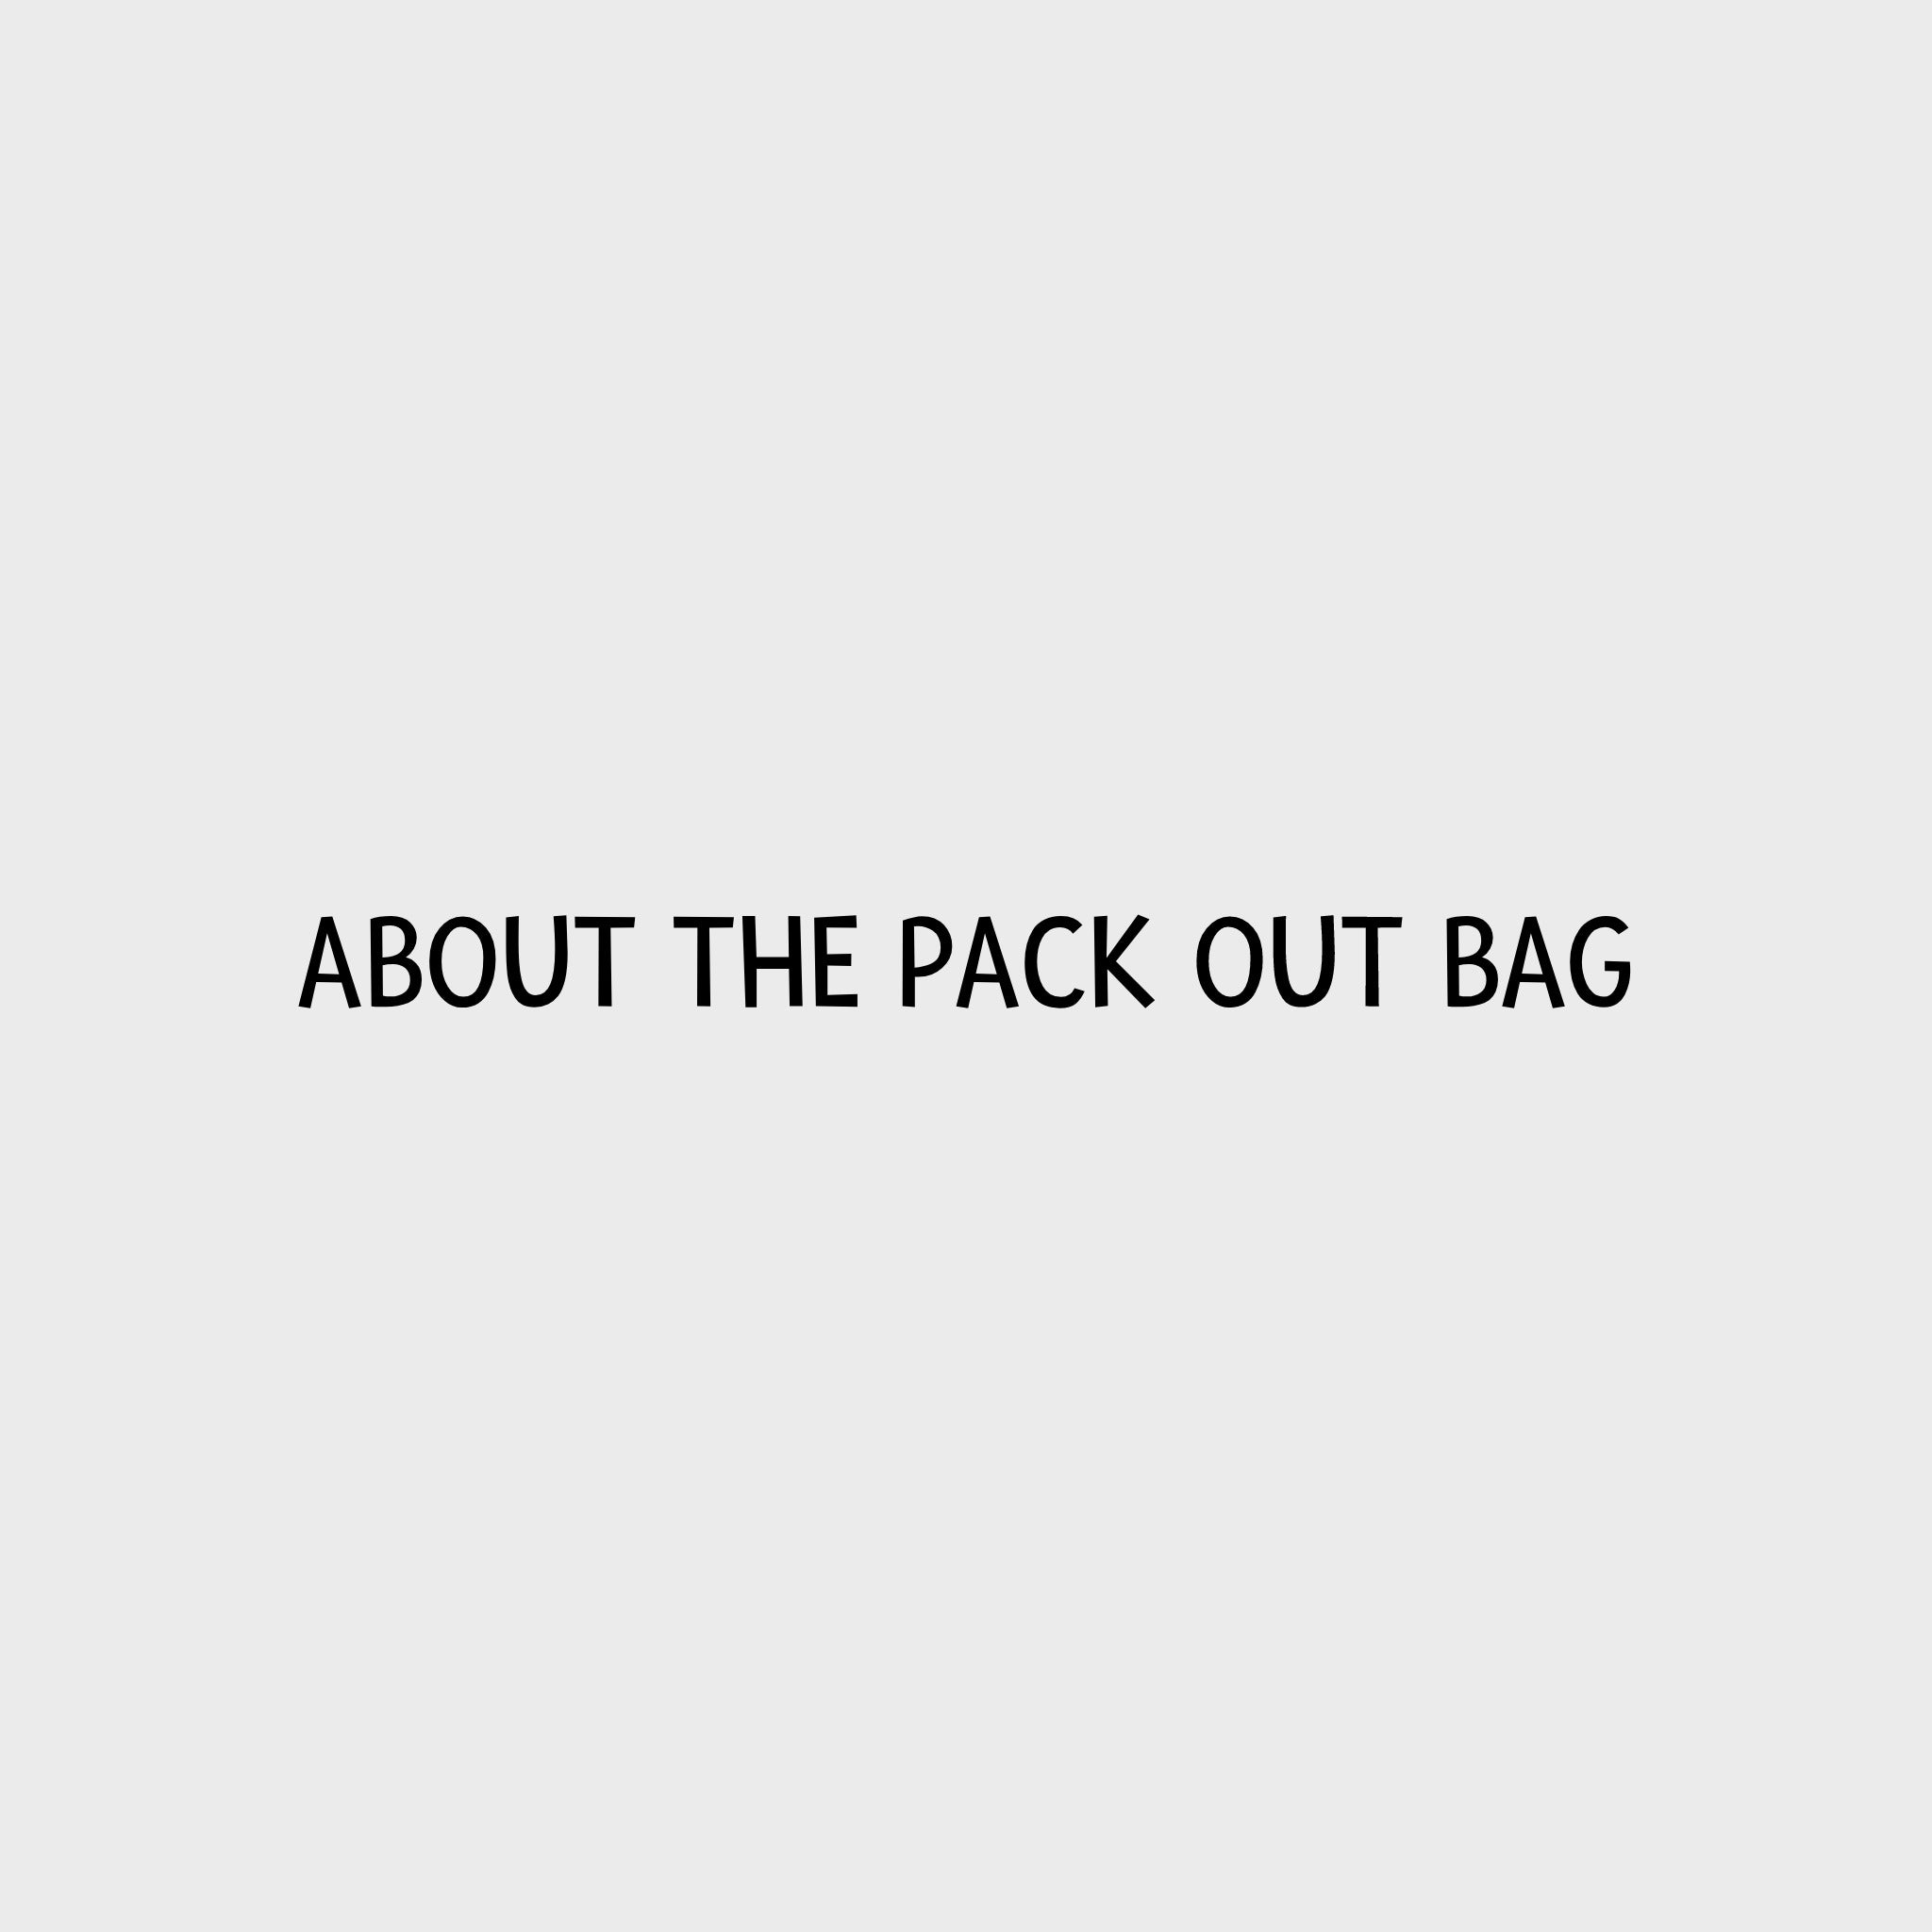 Video - Ruffwear Pack Out Bag